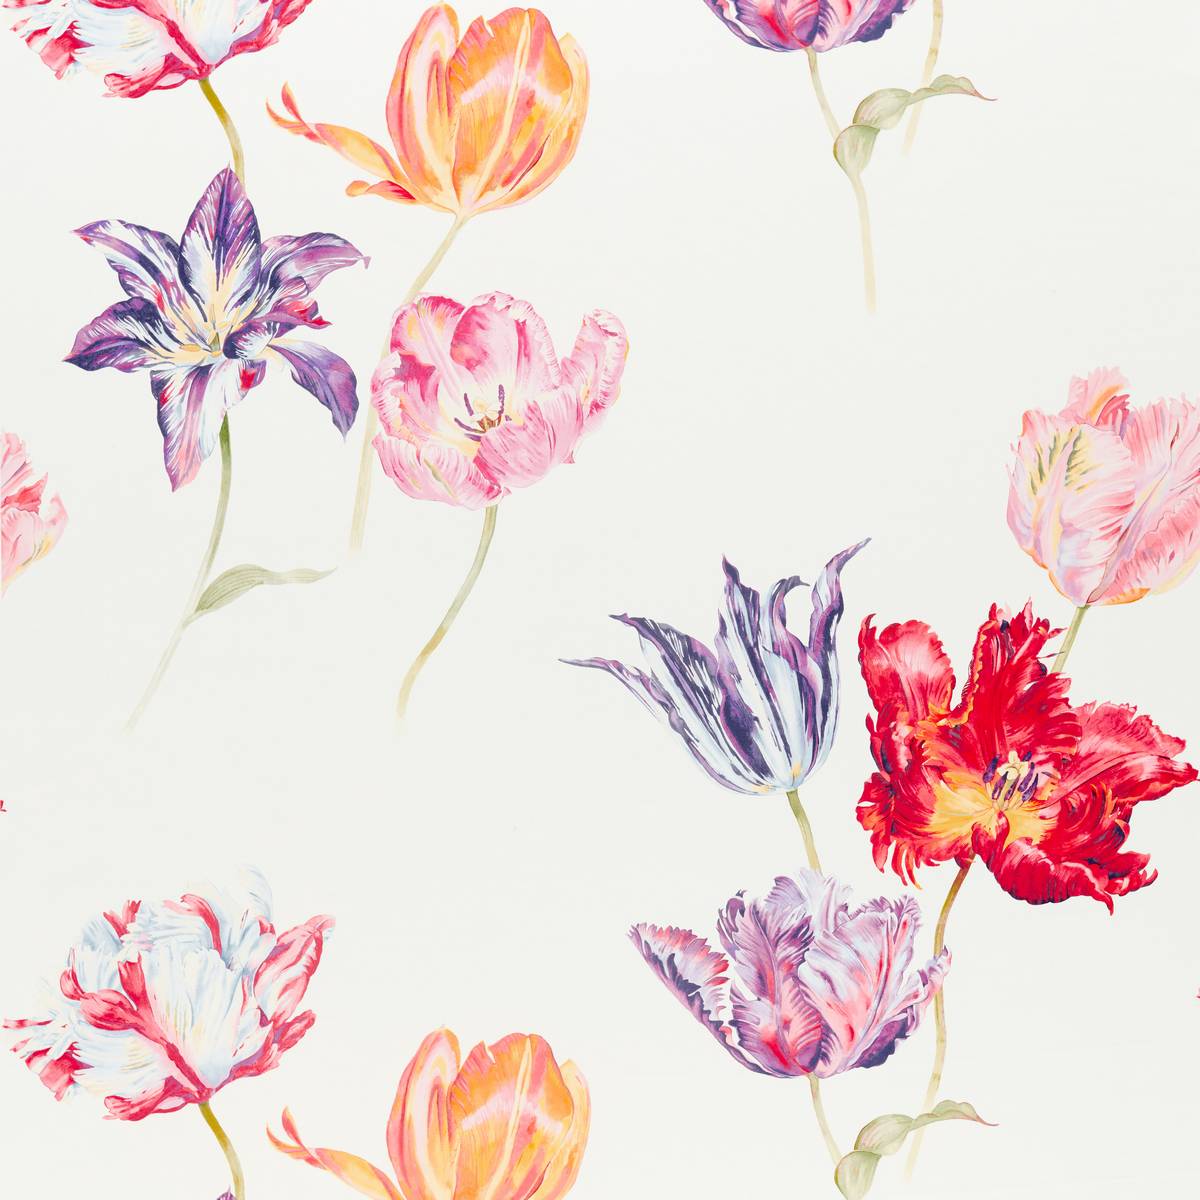 Tulipomania Botanical Fabric by Sanderson